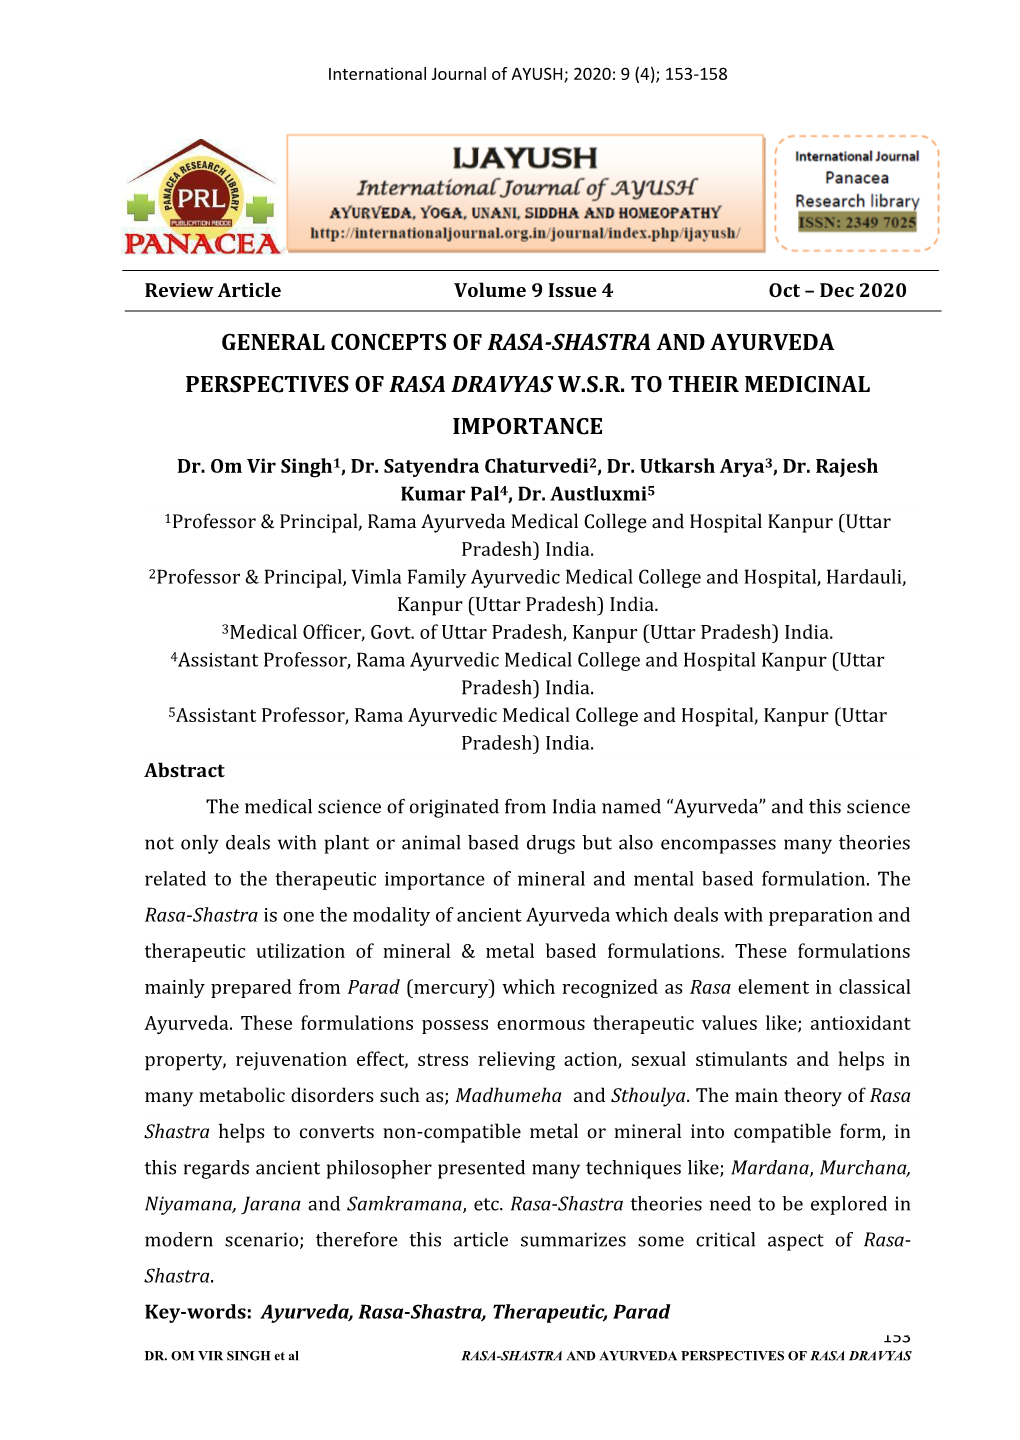 General Concepts of Rasa-Shastra and Ayurveda Perspectives of Rasa Dravyas W.S.R